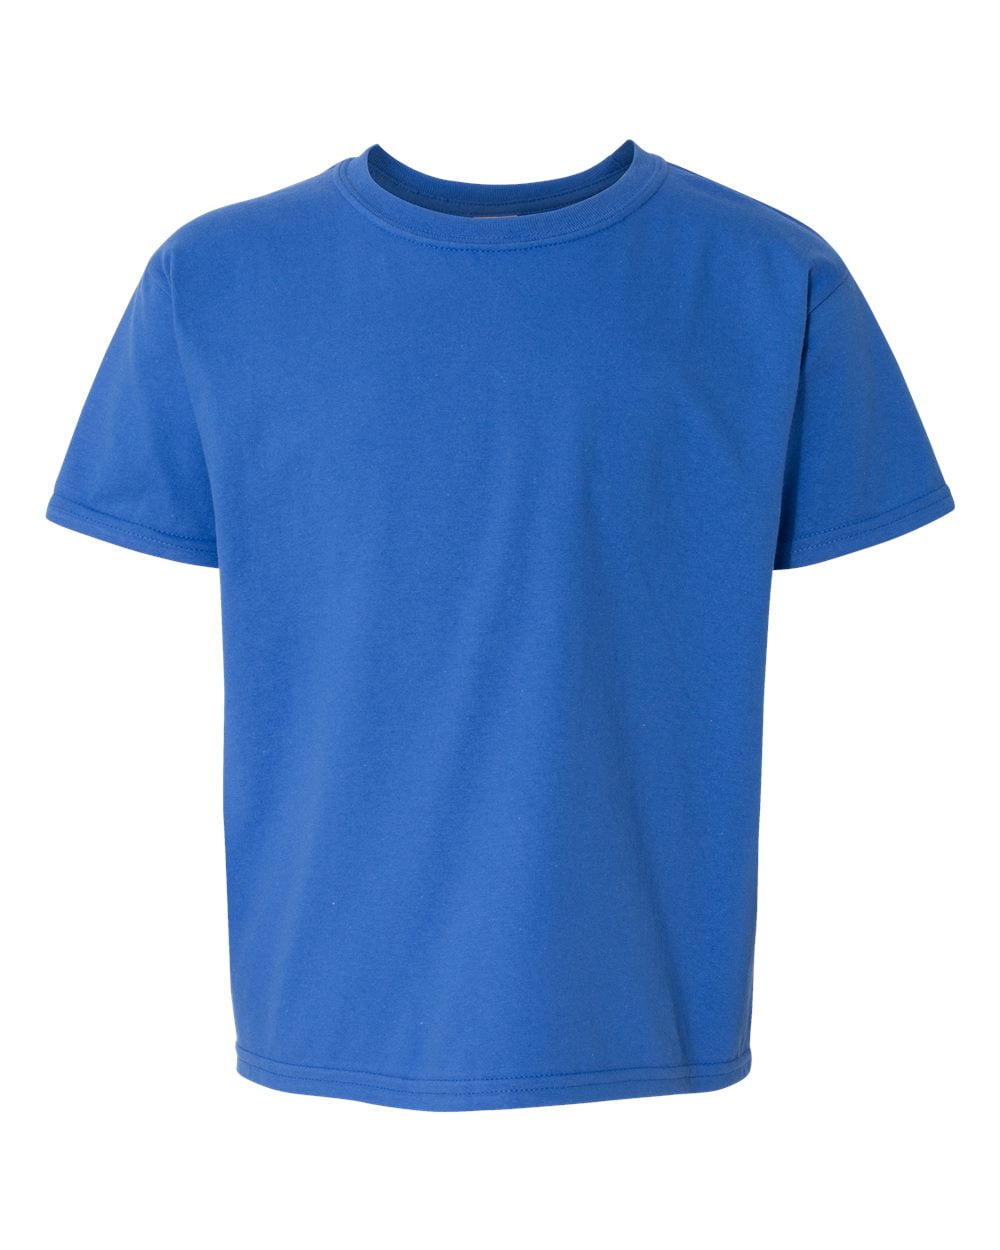 Gildan Unisex Kids Tees Softstyle 100% Cotton School Youth Sports Kids T-Shirt